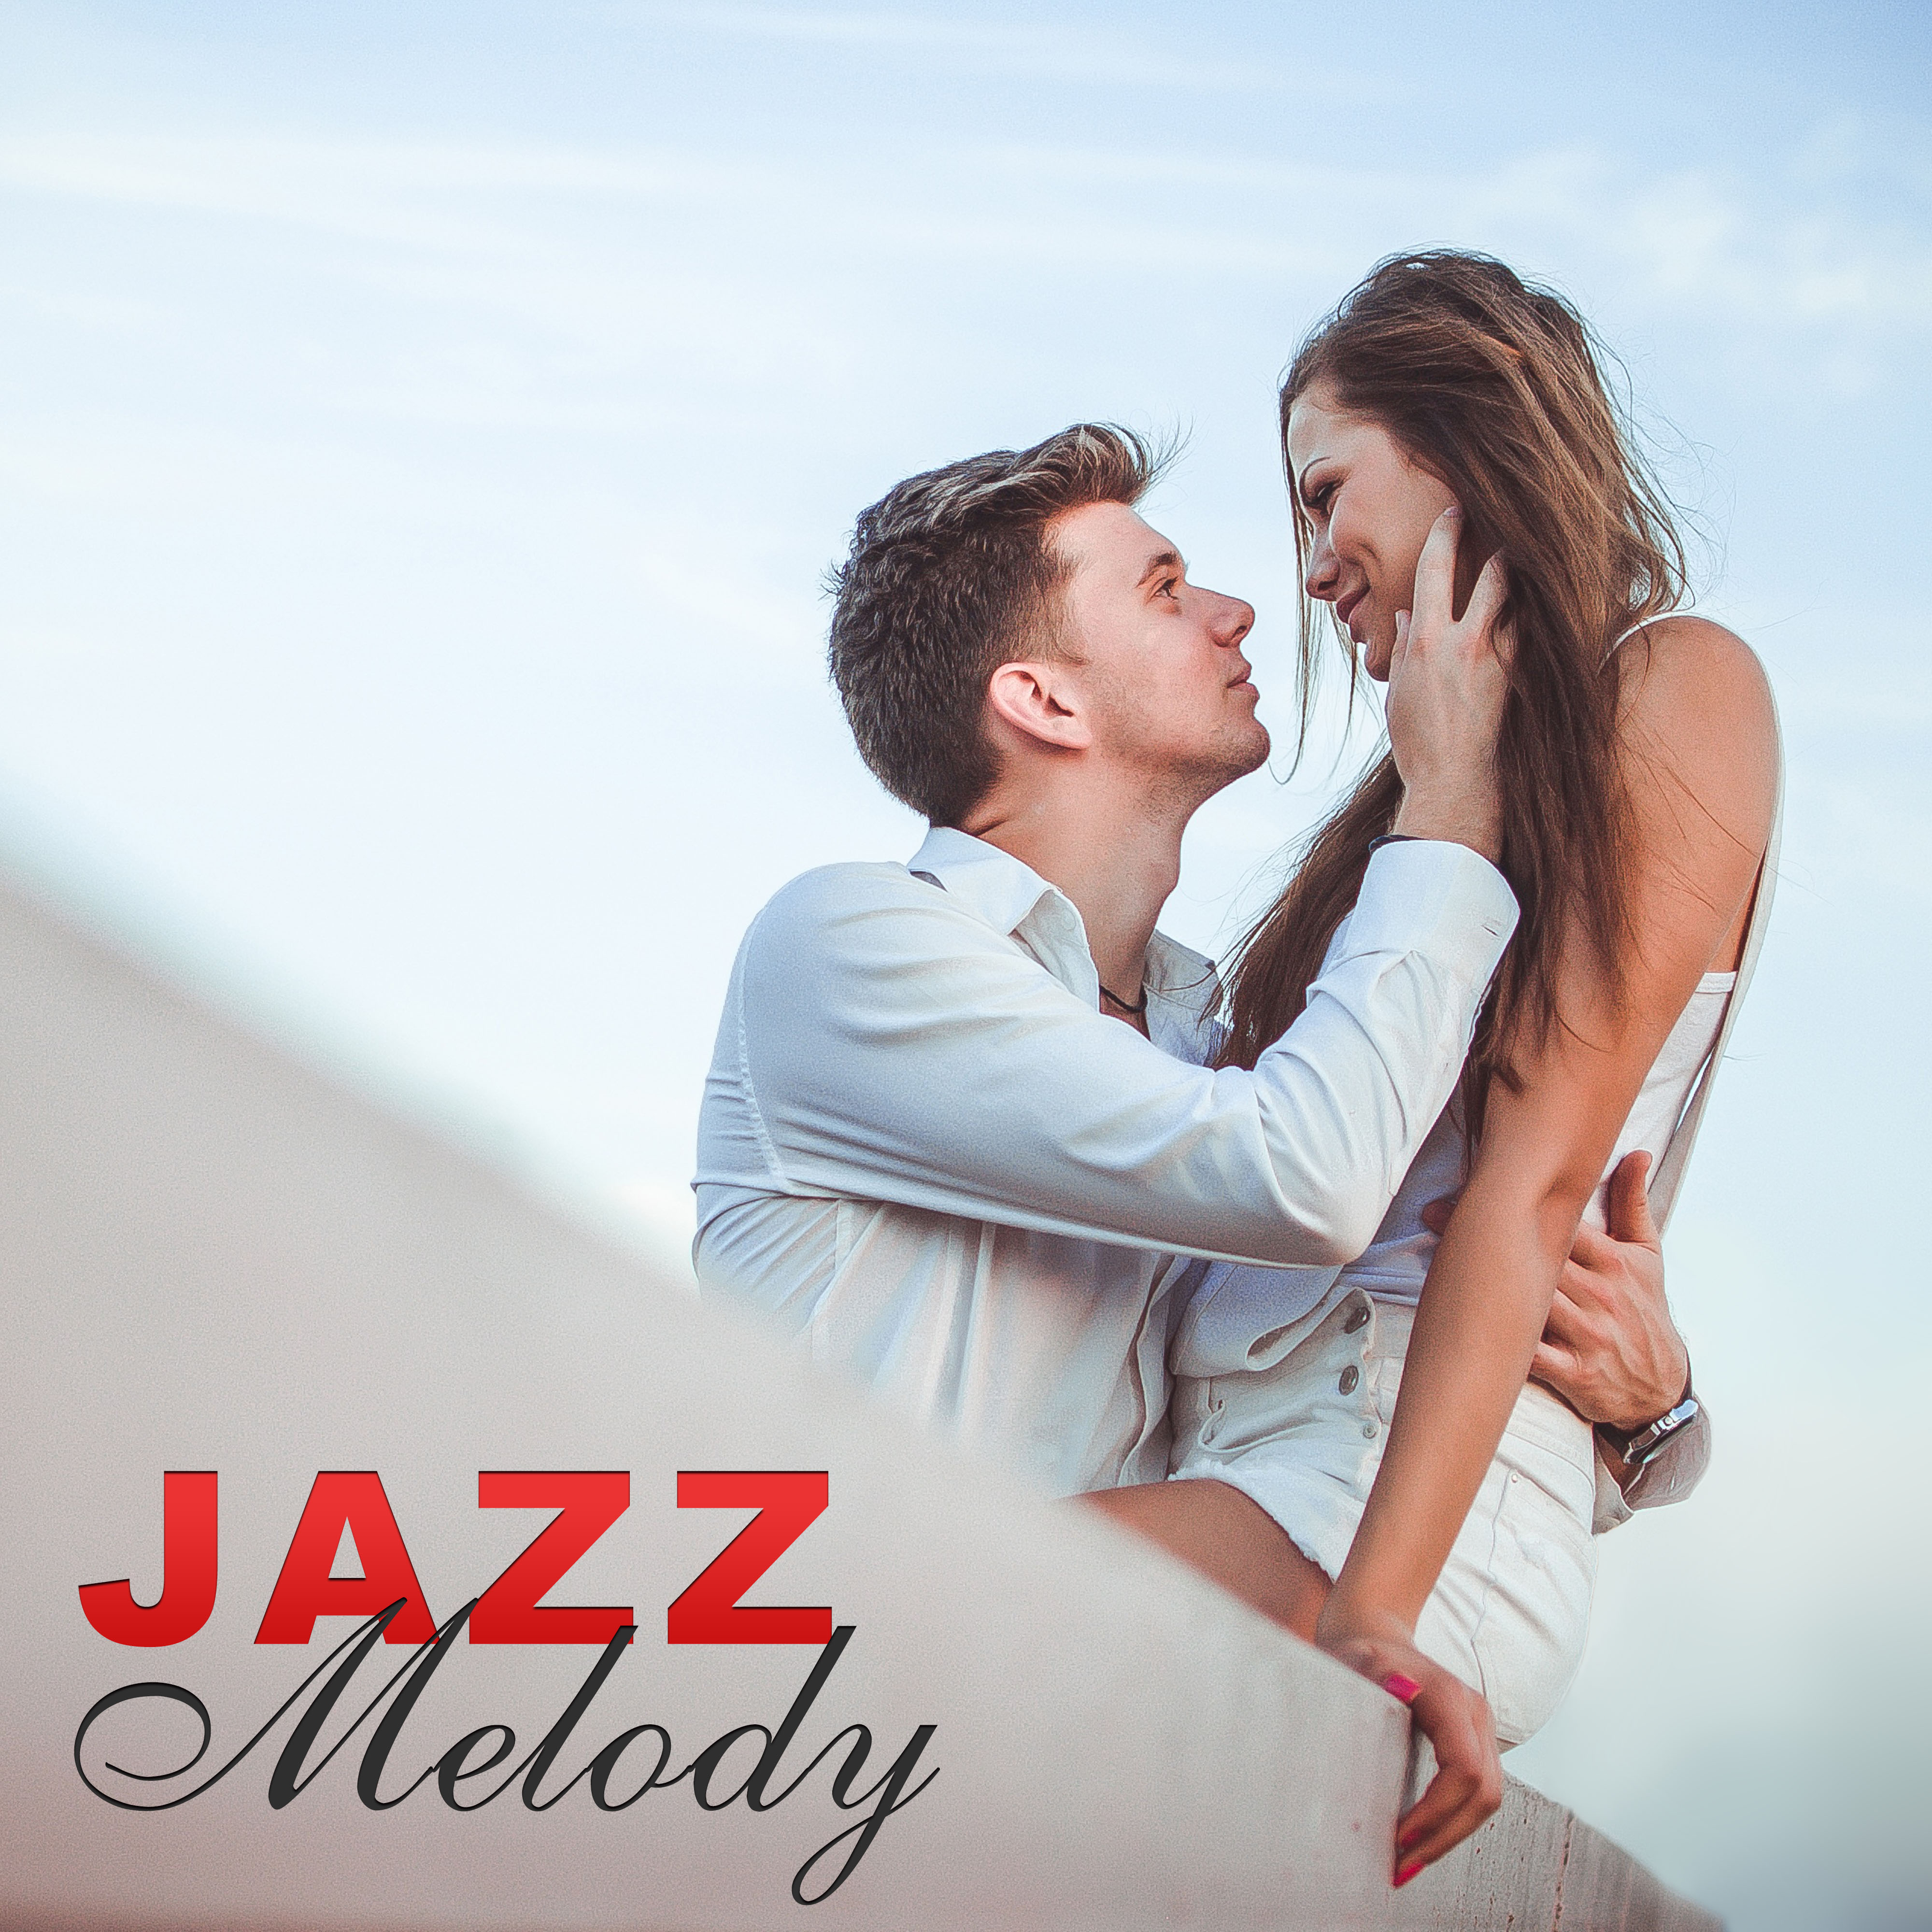 Jazz Melody – Beautiful Jazz Songs, Soothing Piano Jazz for Long Night, Instrumental Piano, Jazz Music